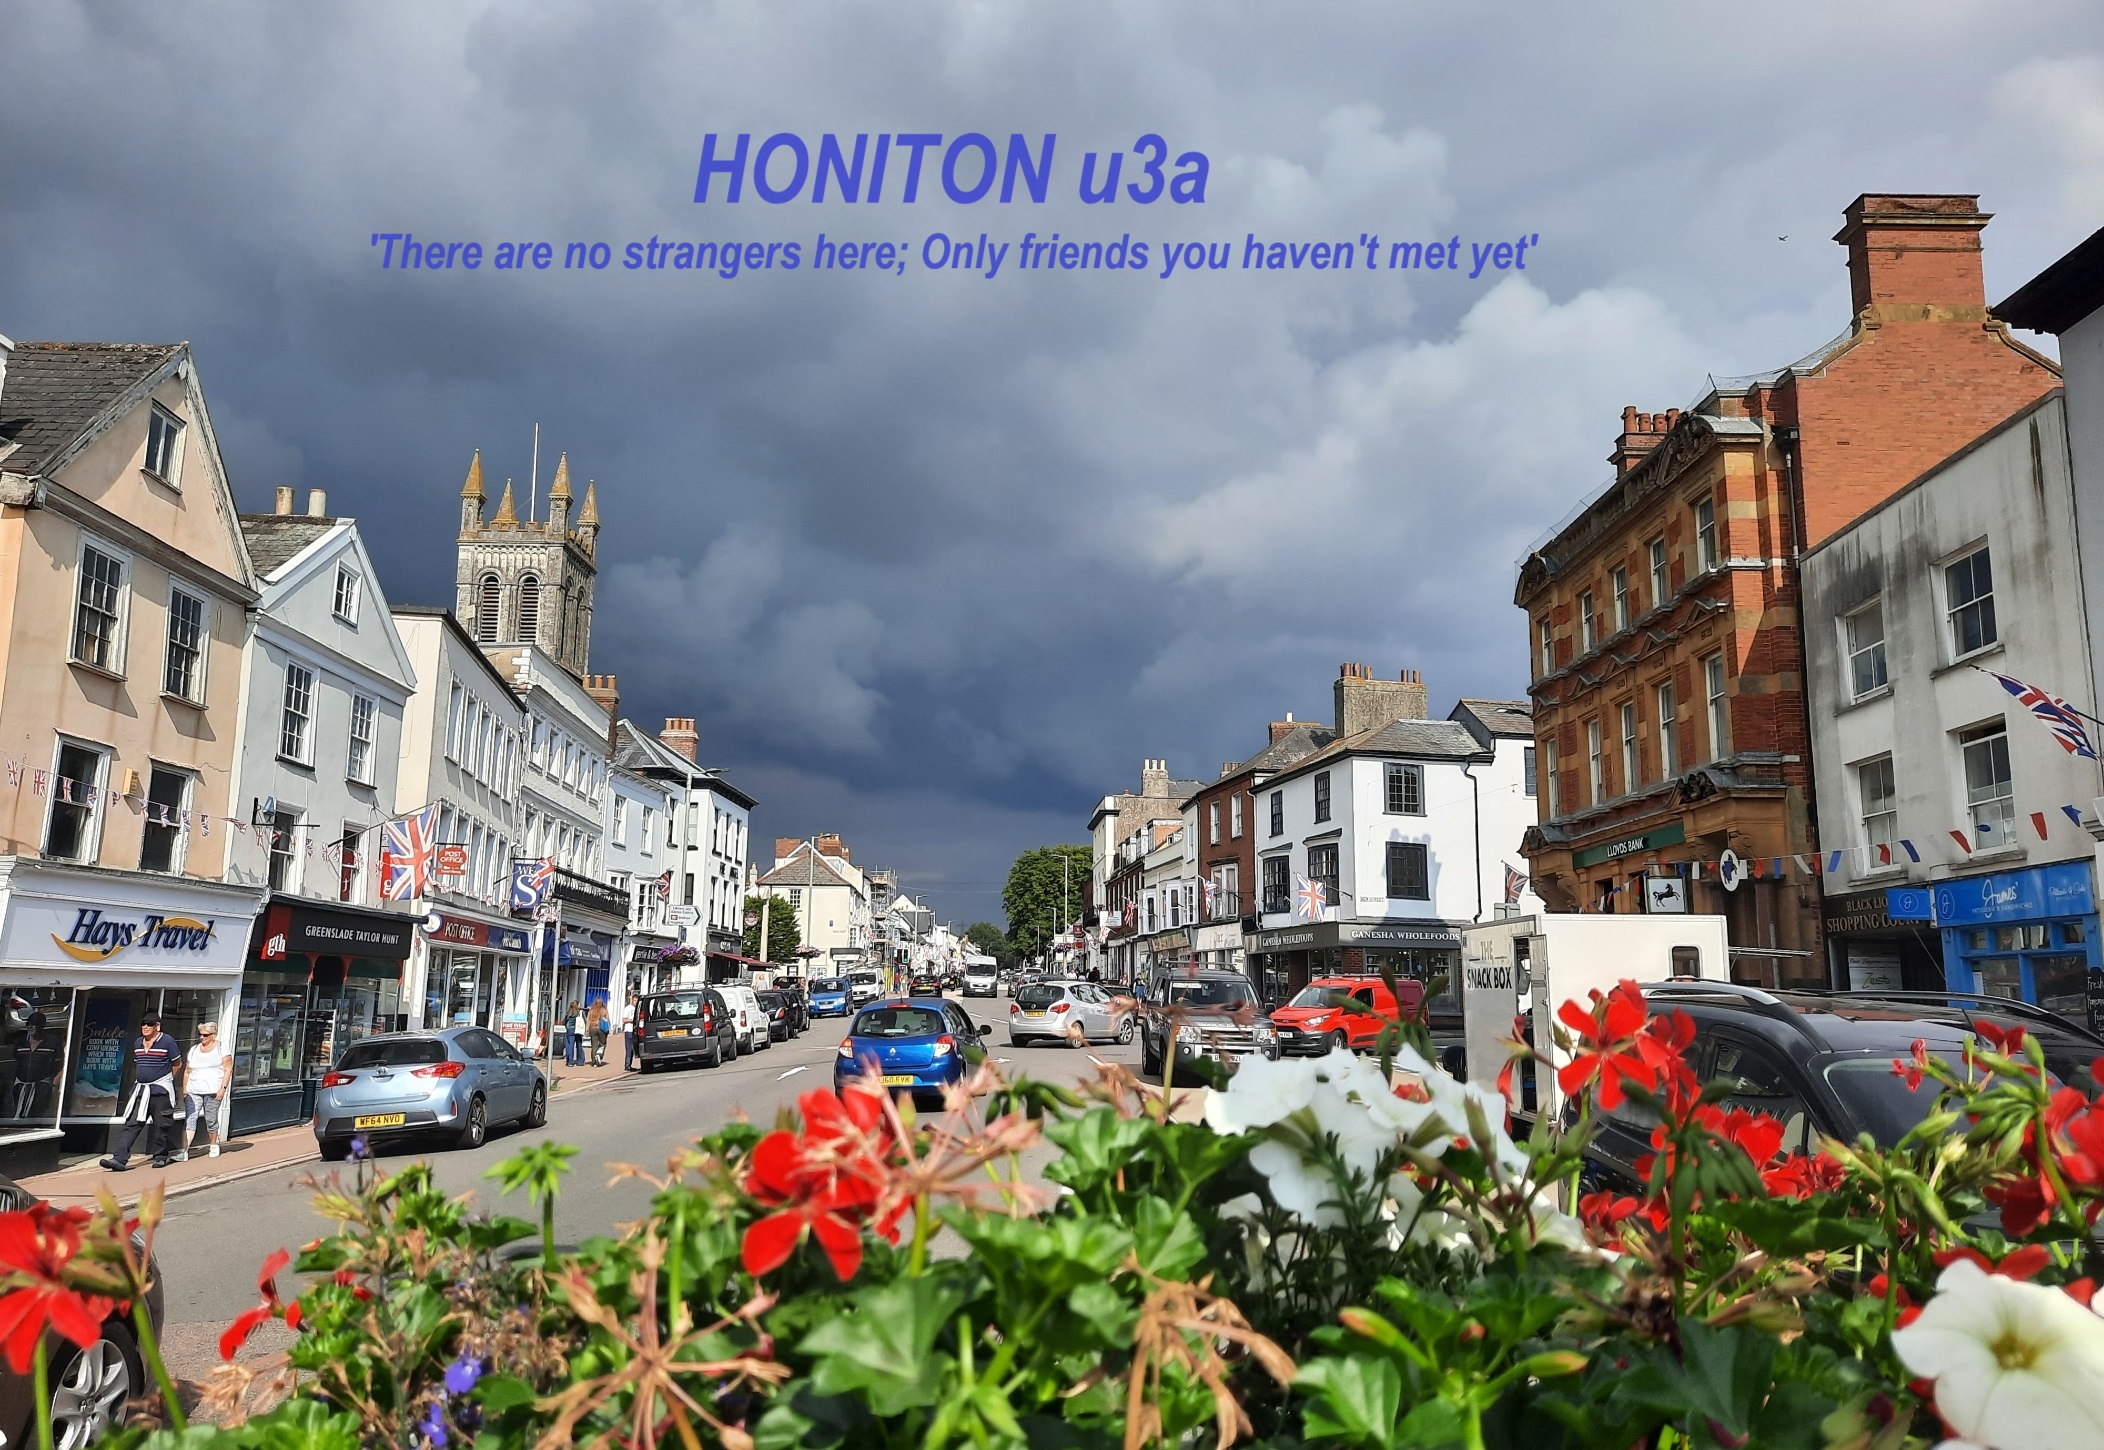 Honiton u3a: There are no strangers here